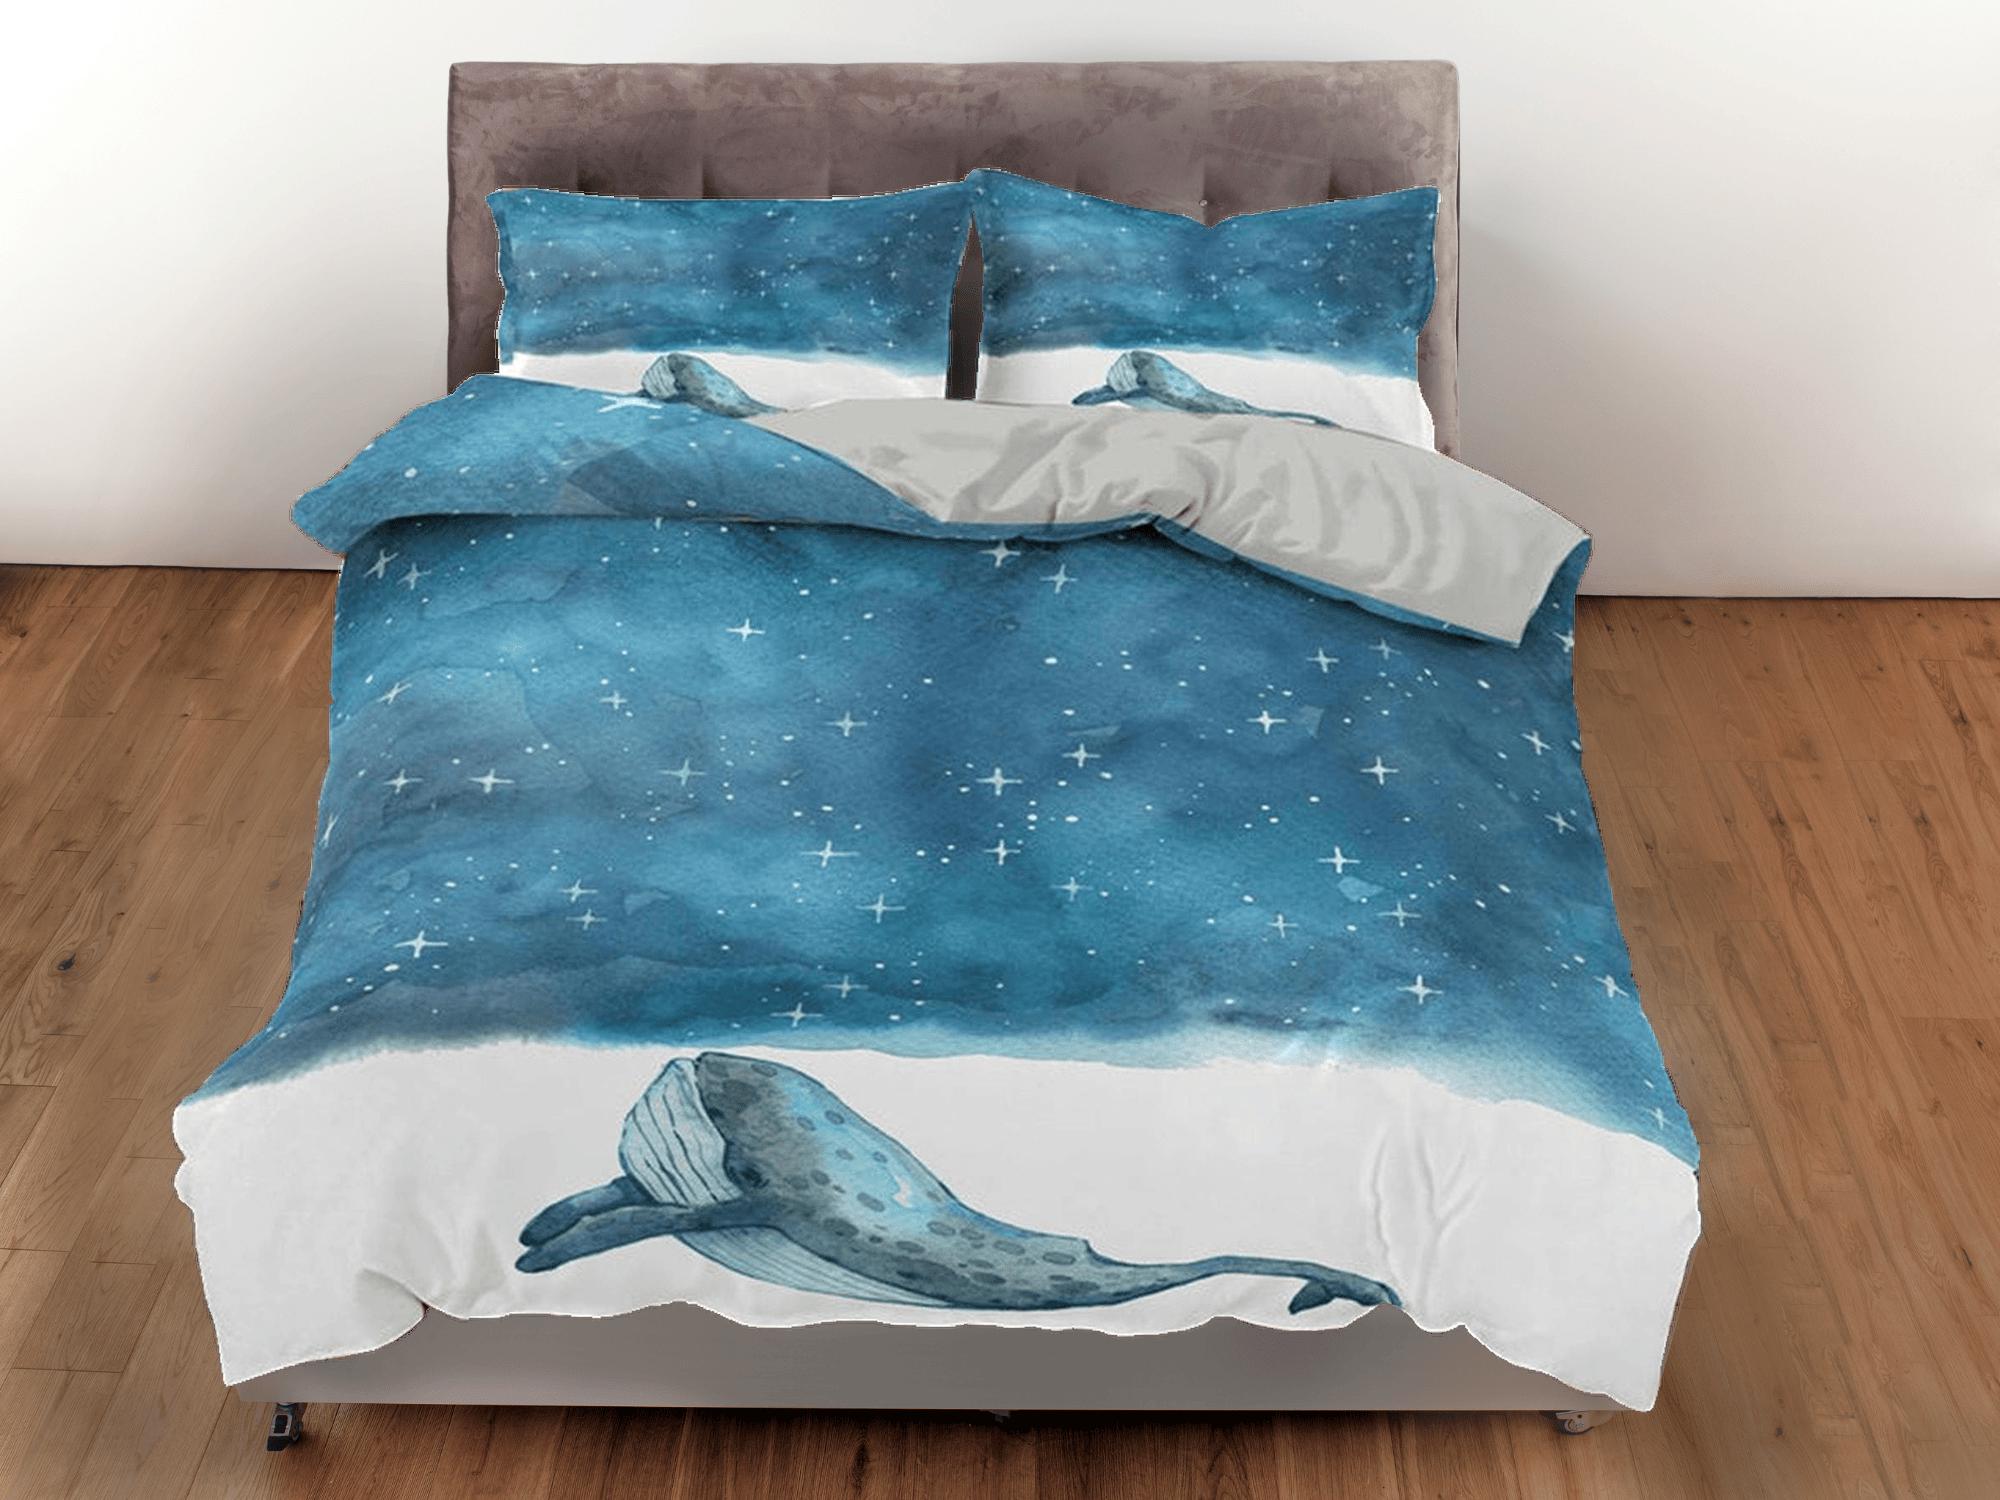 daintyduvet Stars in sky painted dolphin bedding artistic blue duvet cover, ocean blush decor sea animal bedding set full king queen twin, dorm bedding